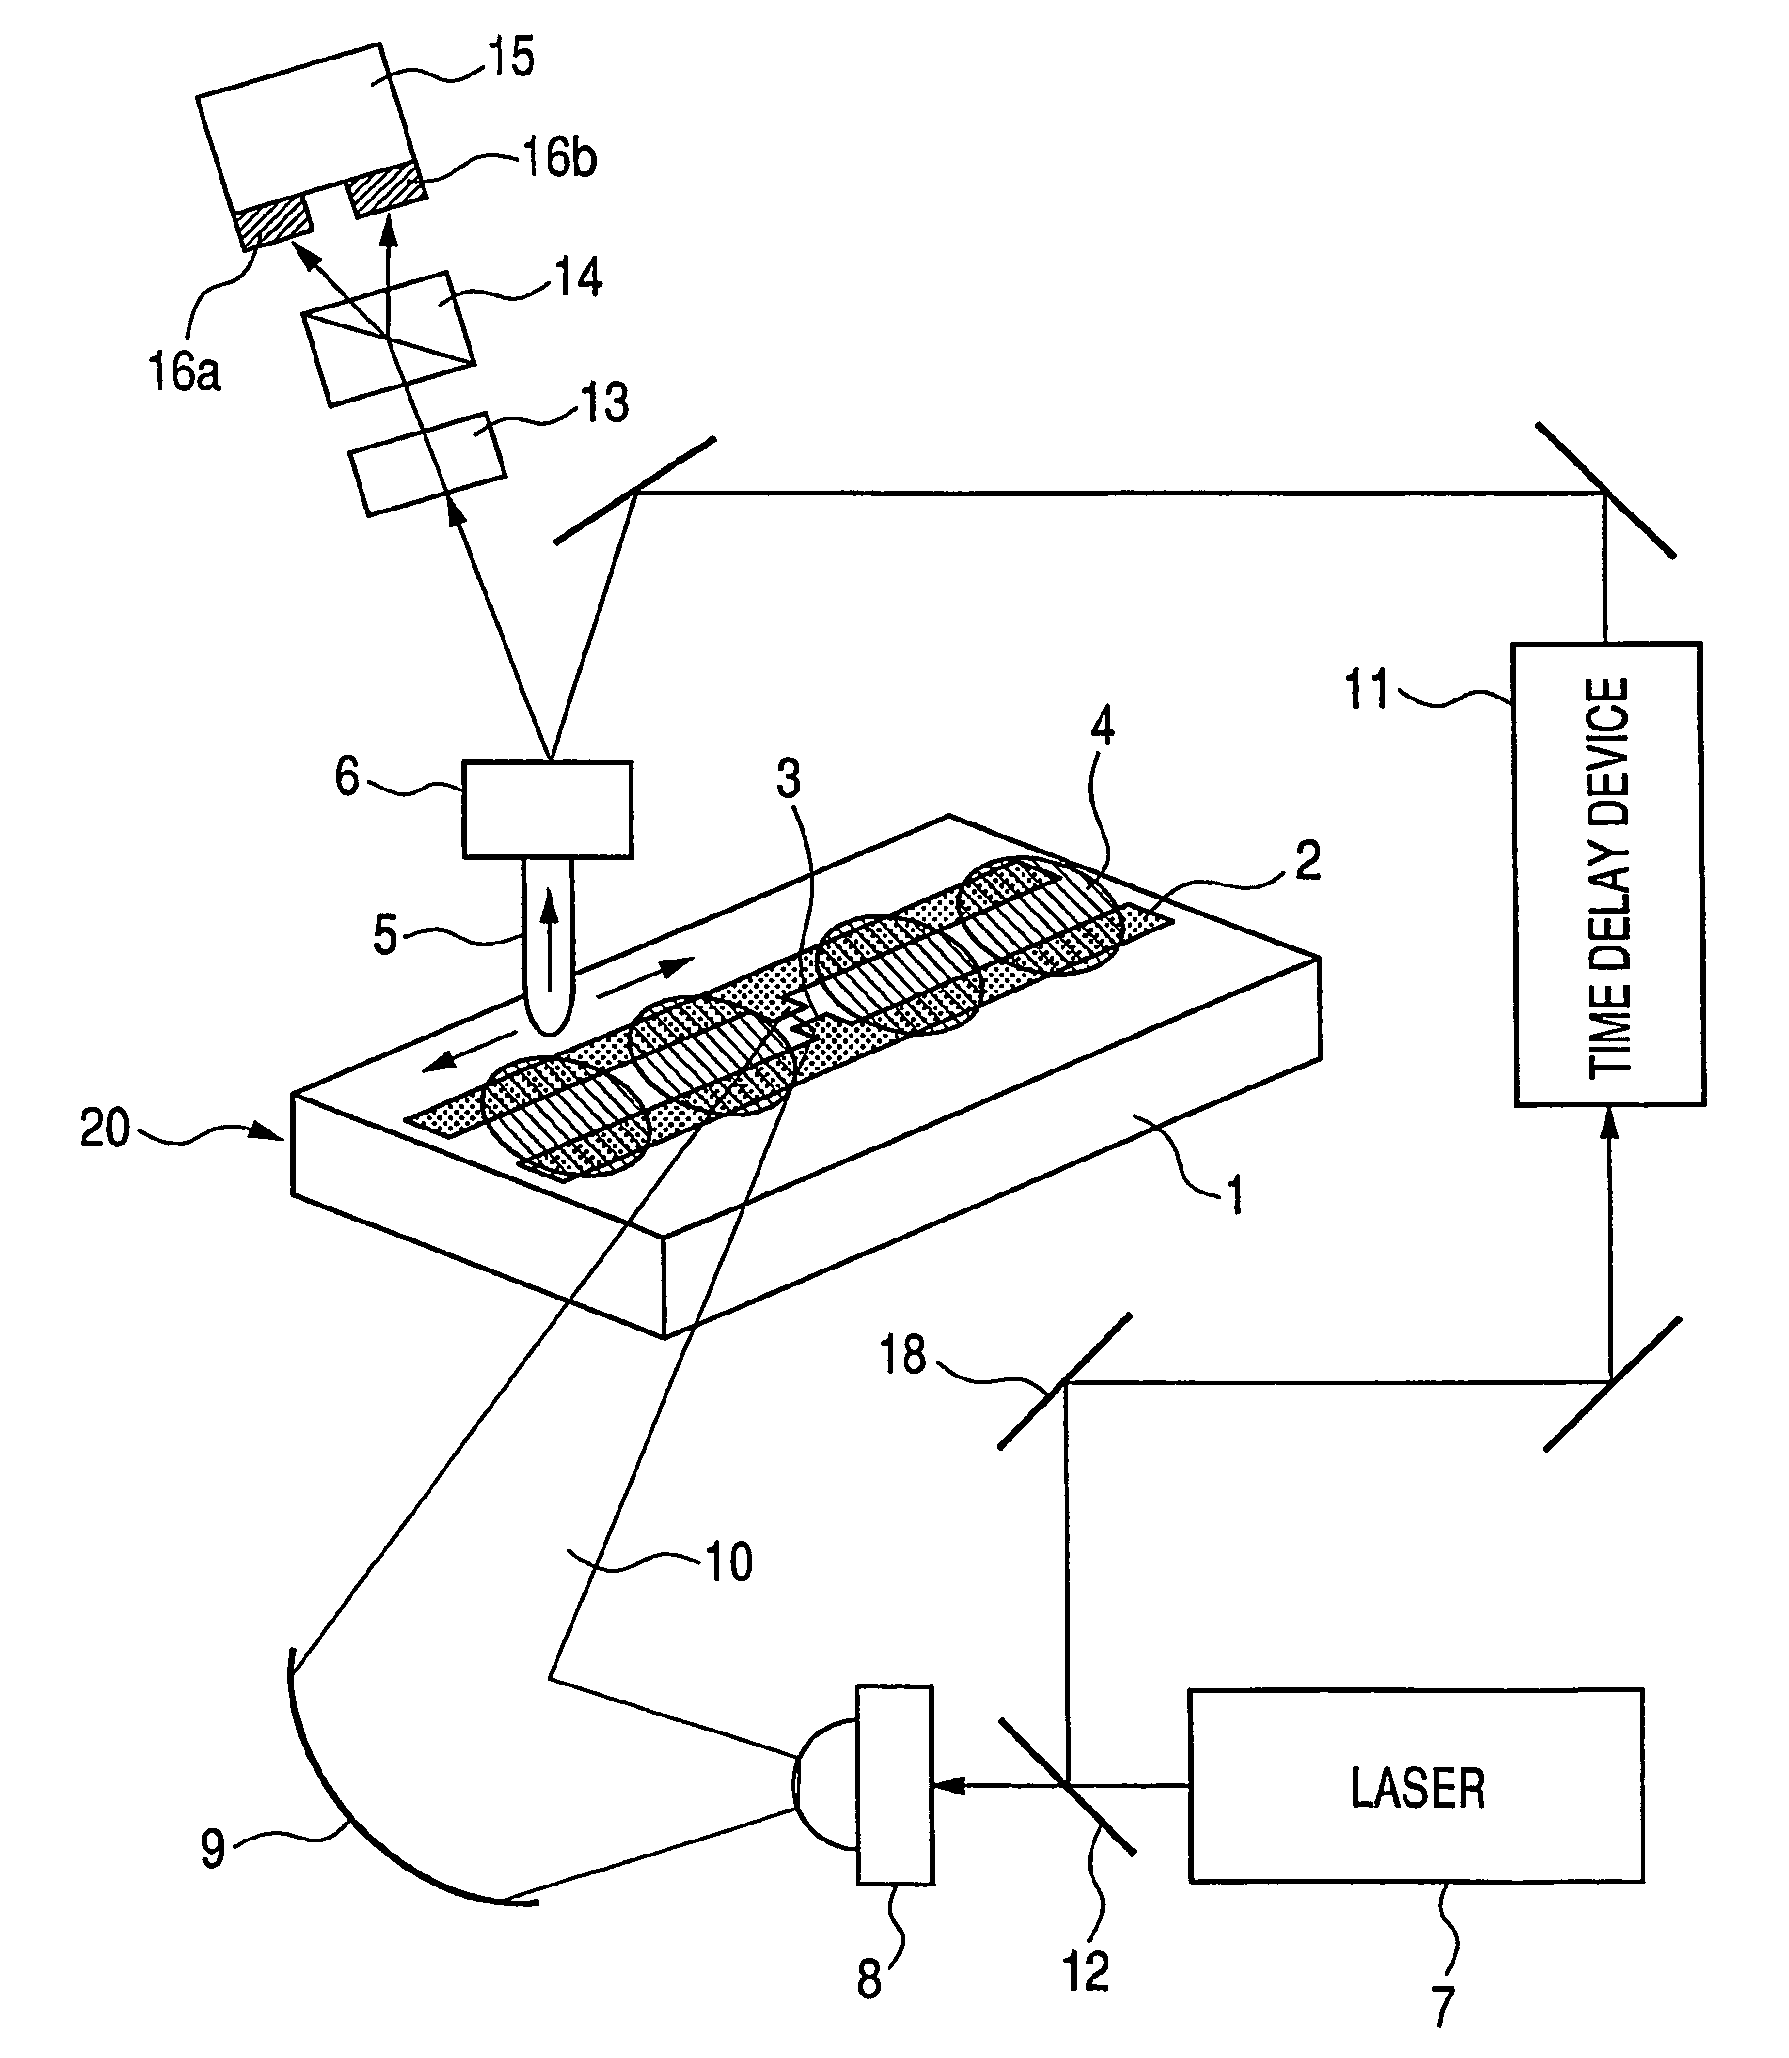 Terahertz sensing apparatus using a transmission line